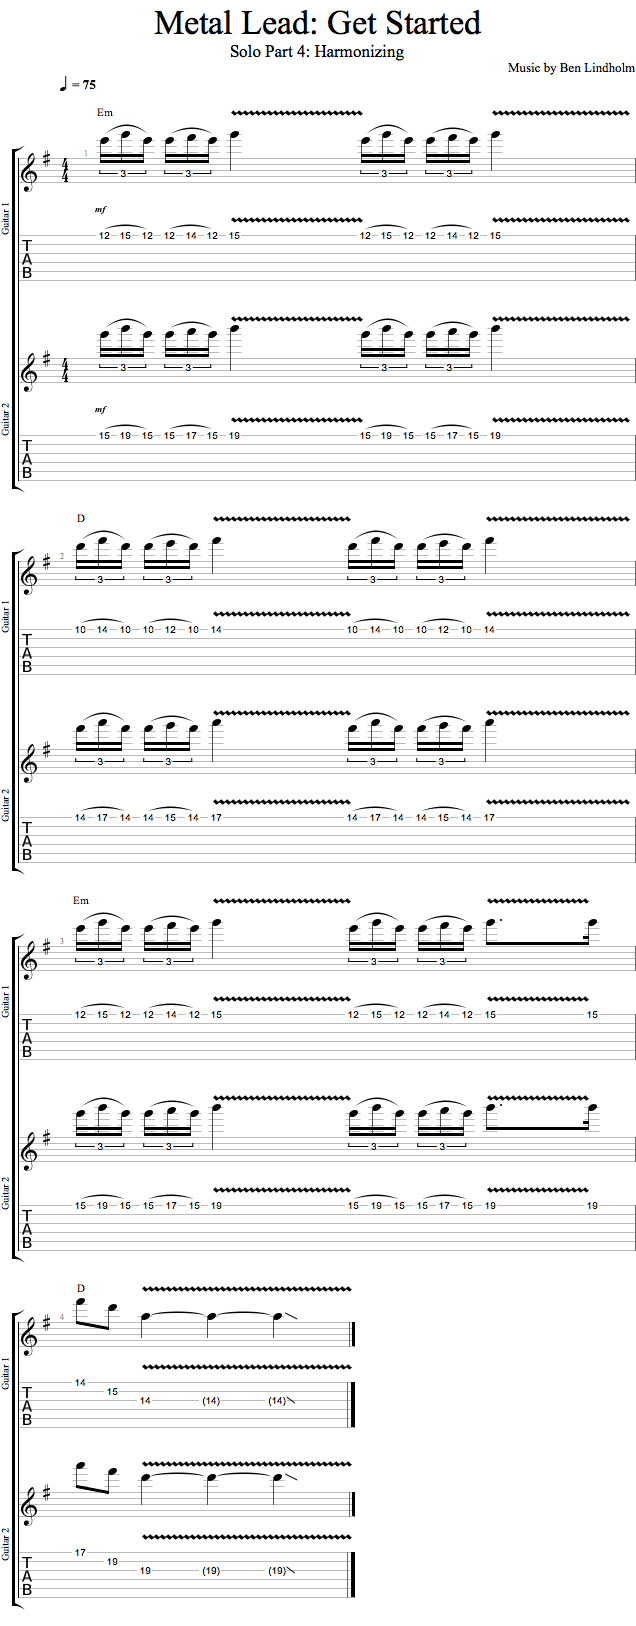 Solo Part 4: Harmonizing song notation